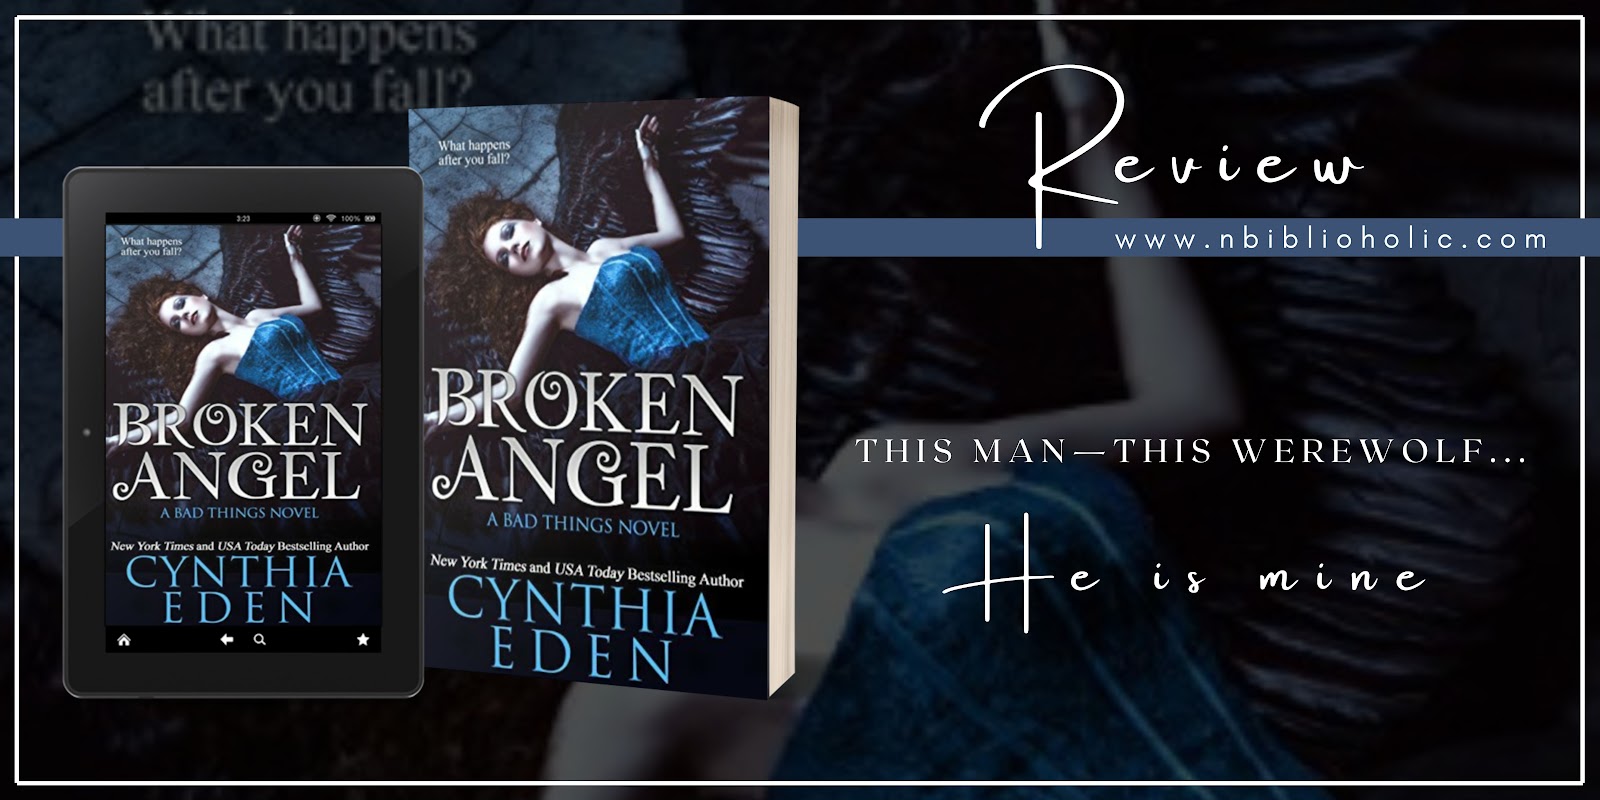 Broken Angel by Cynthia Eden